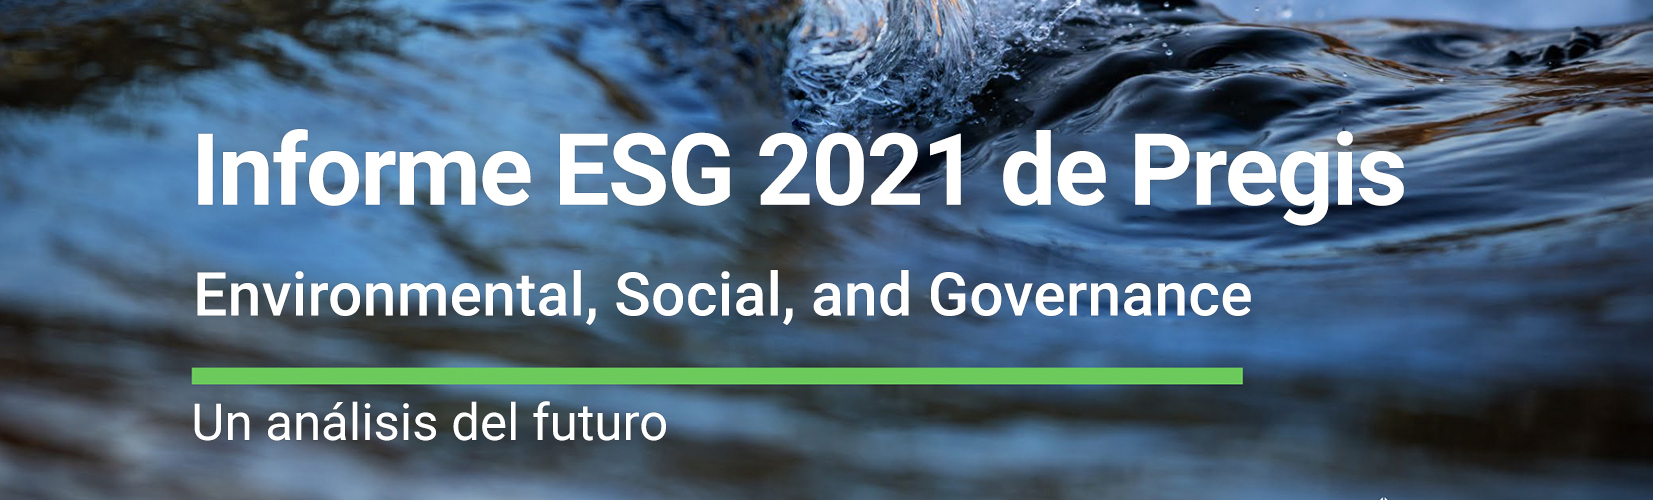 Informe 2021 ESG de Pregis